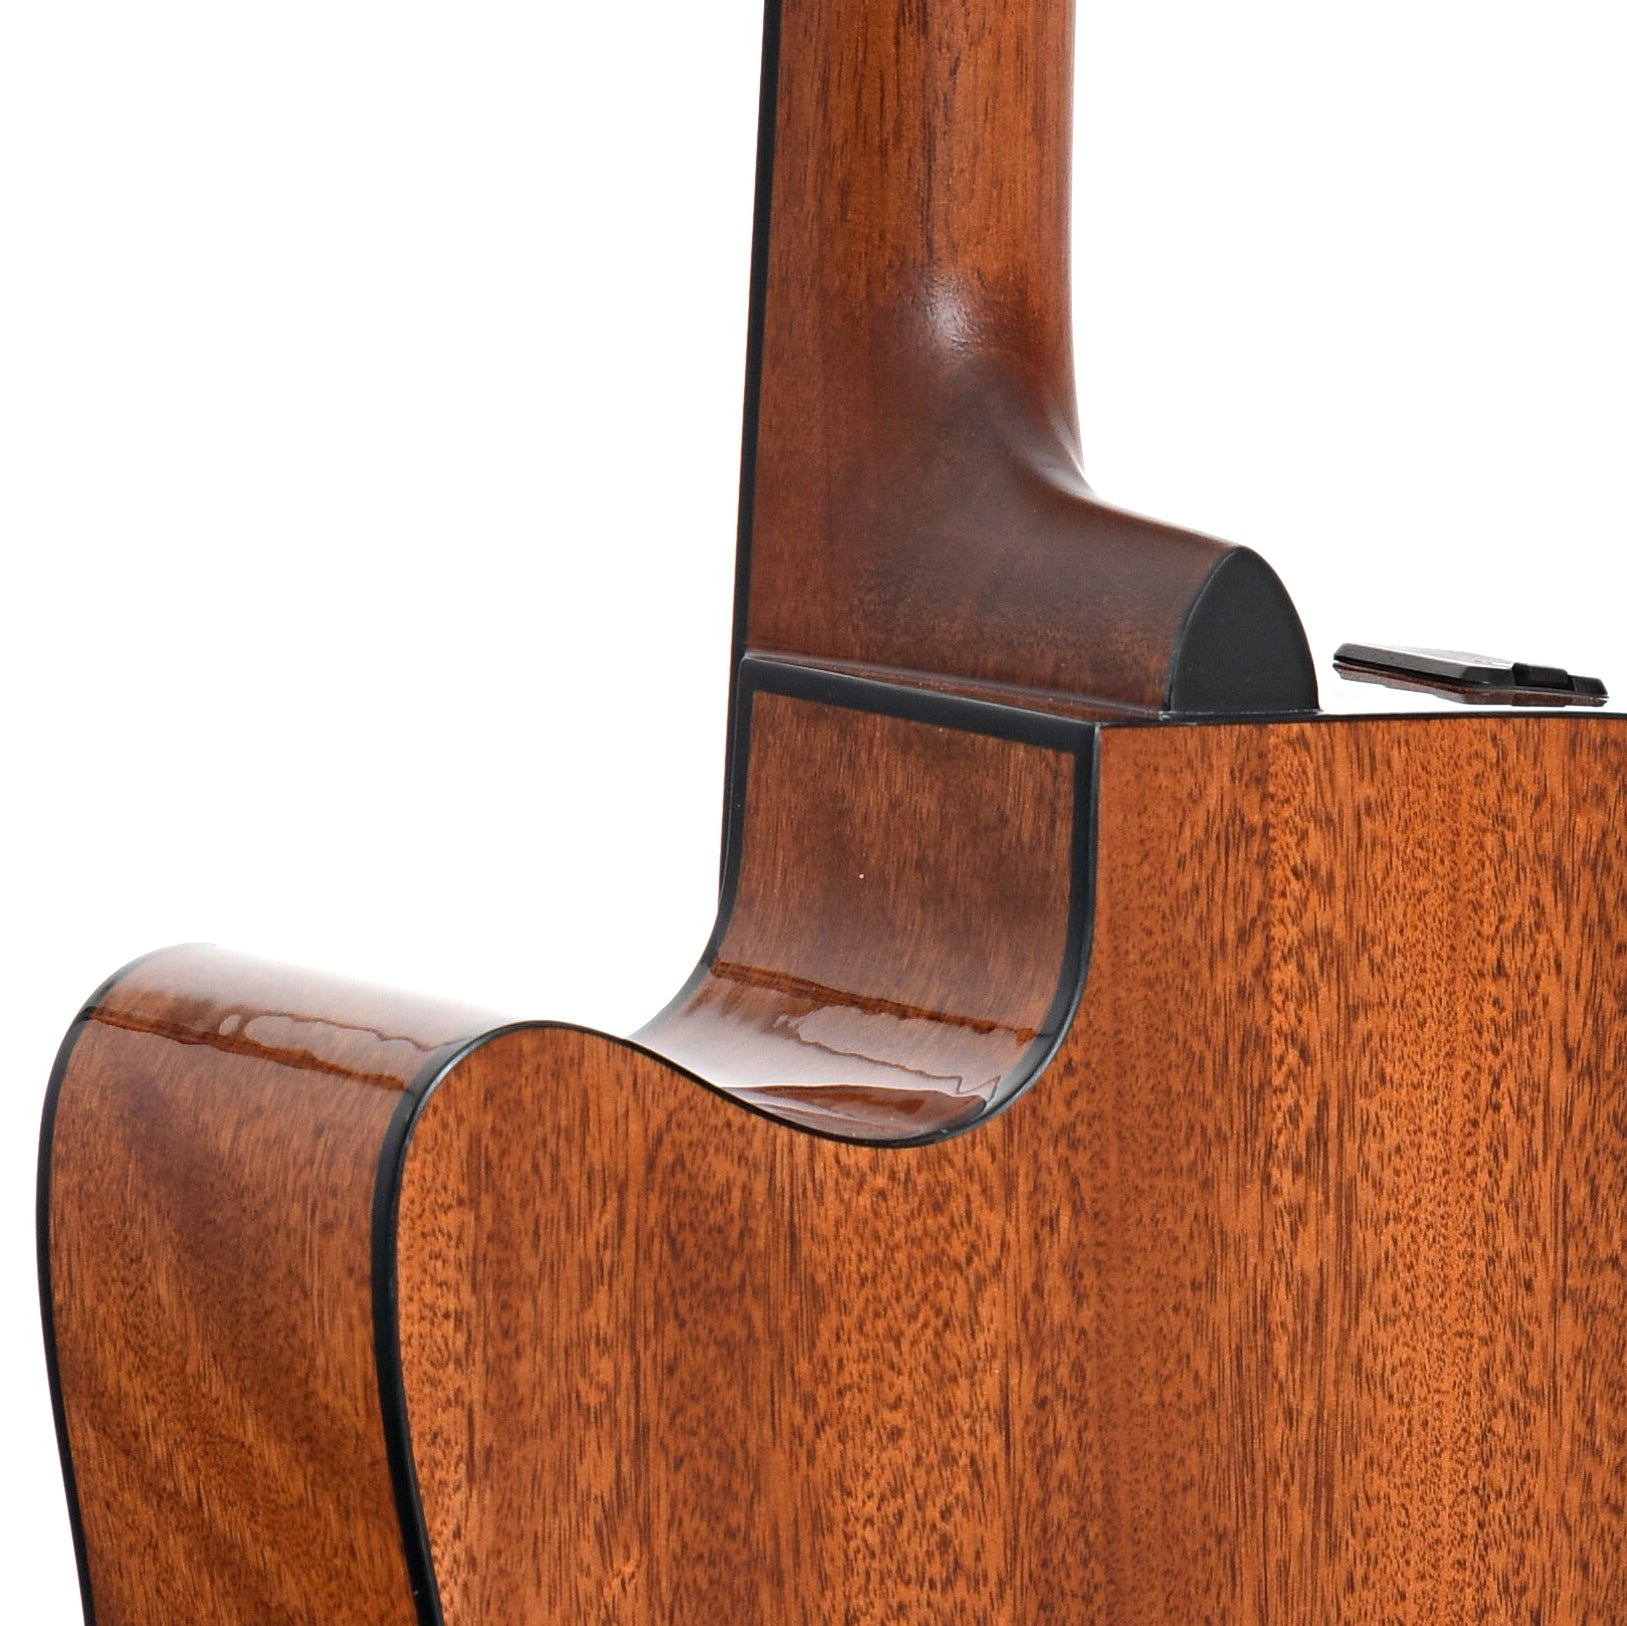 Heel of Yamaha FGX800C Acoustic Guitar